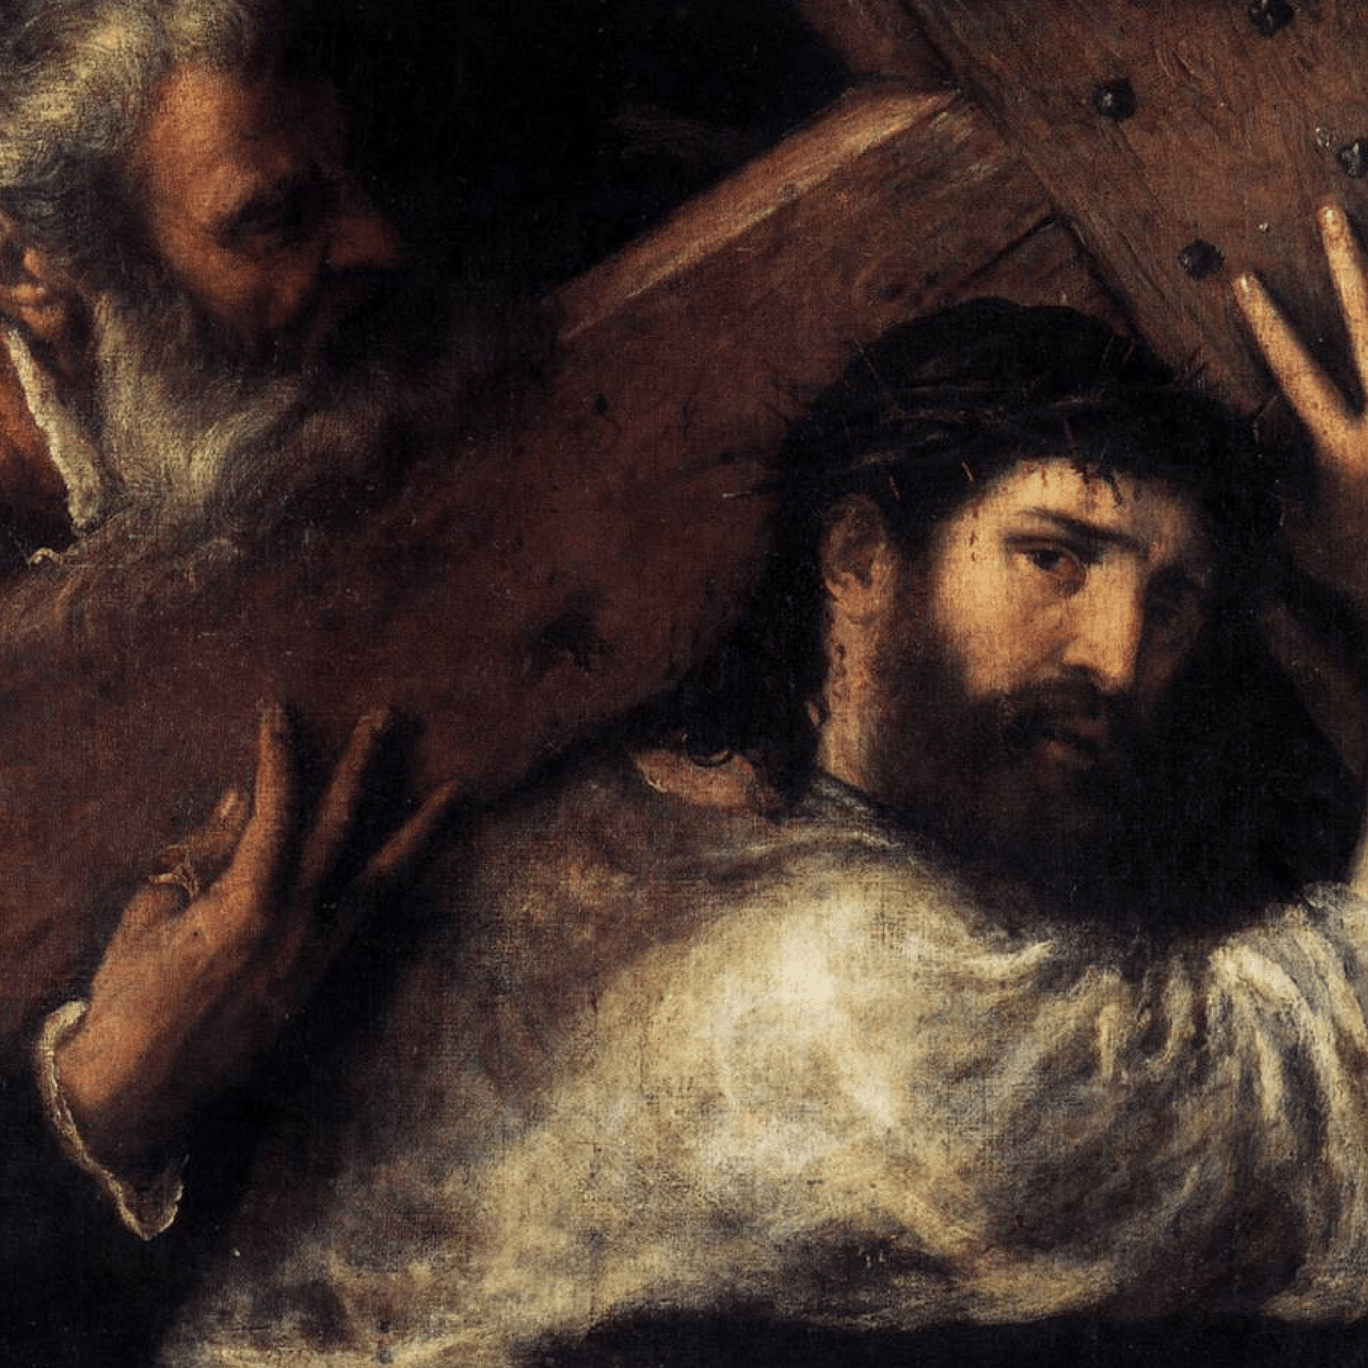 Pintura representa o Cirineu ajudando Jesus